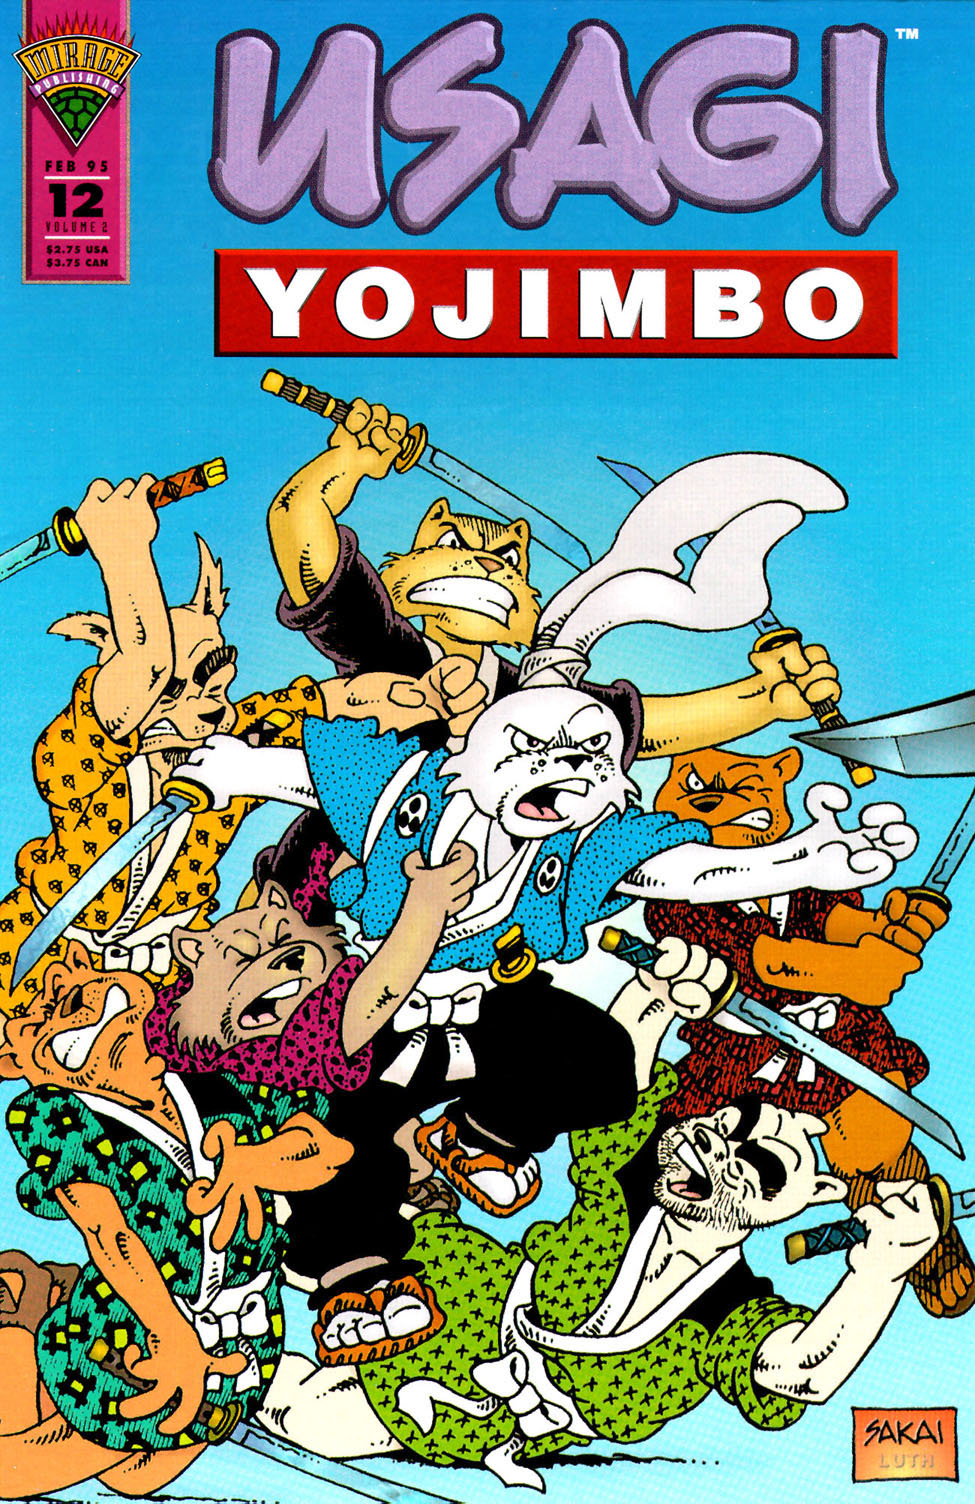 Usagi Yojimbo (1993) issue 12 - Page 1